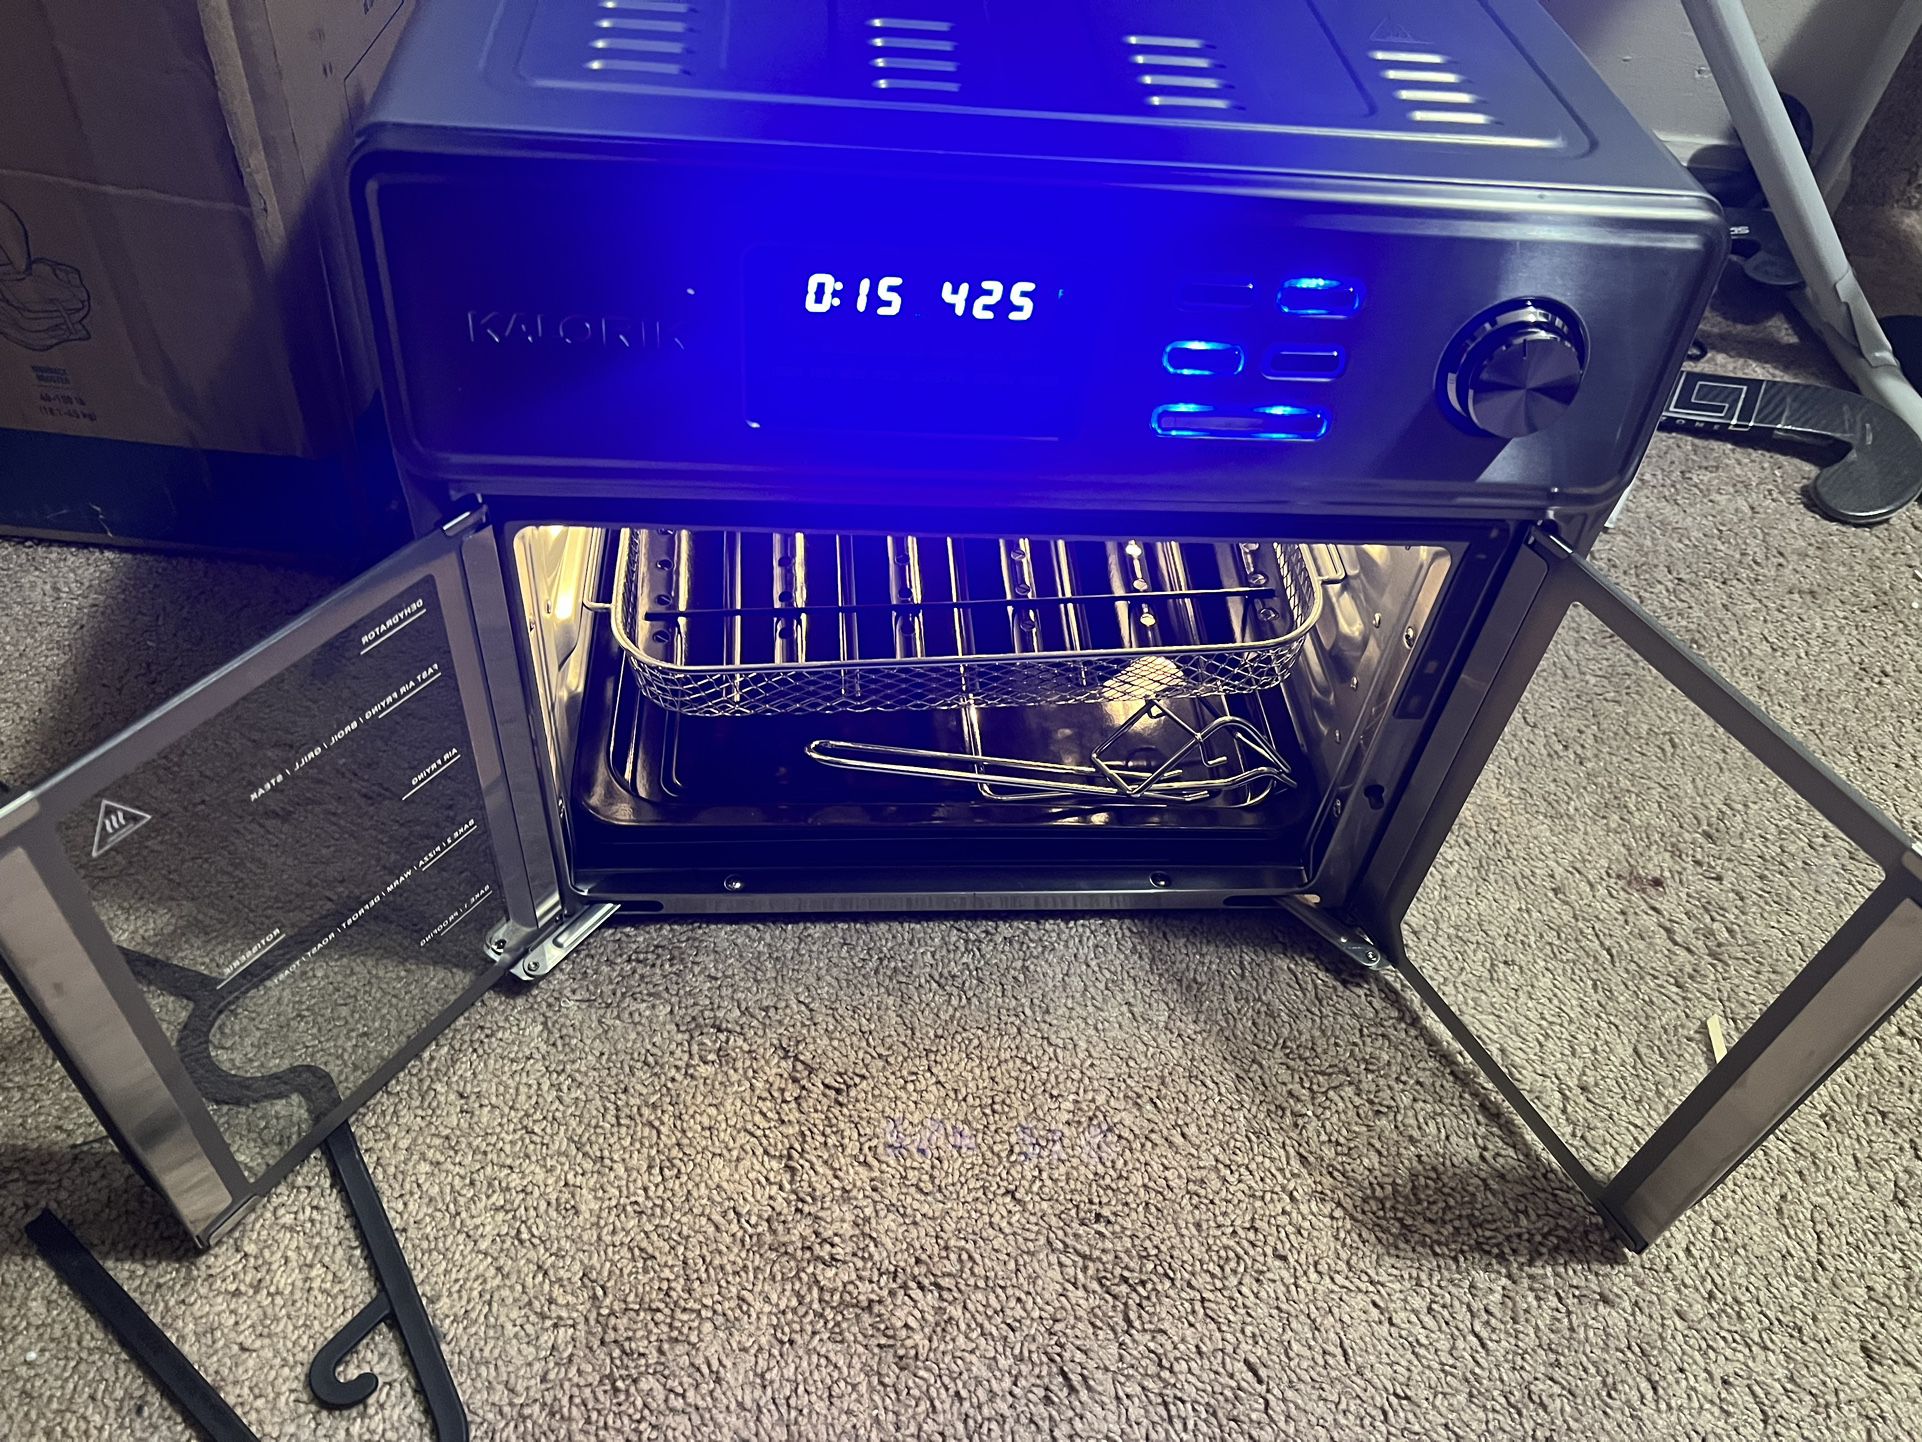 Digital Air Fryer Oven, 26 Quart